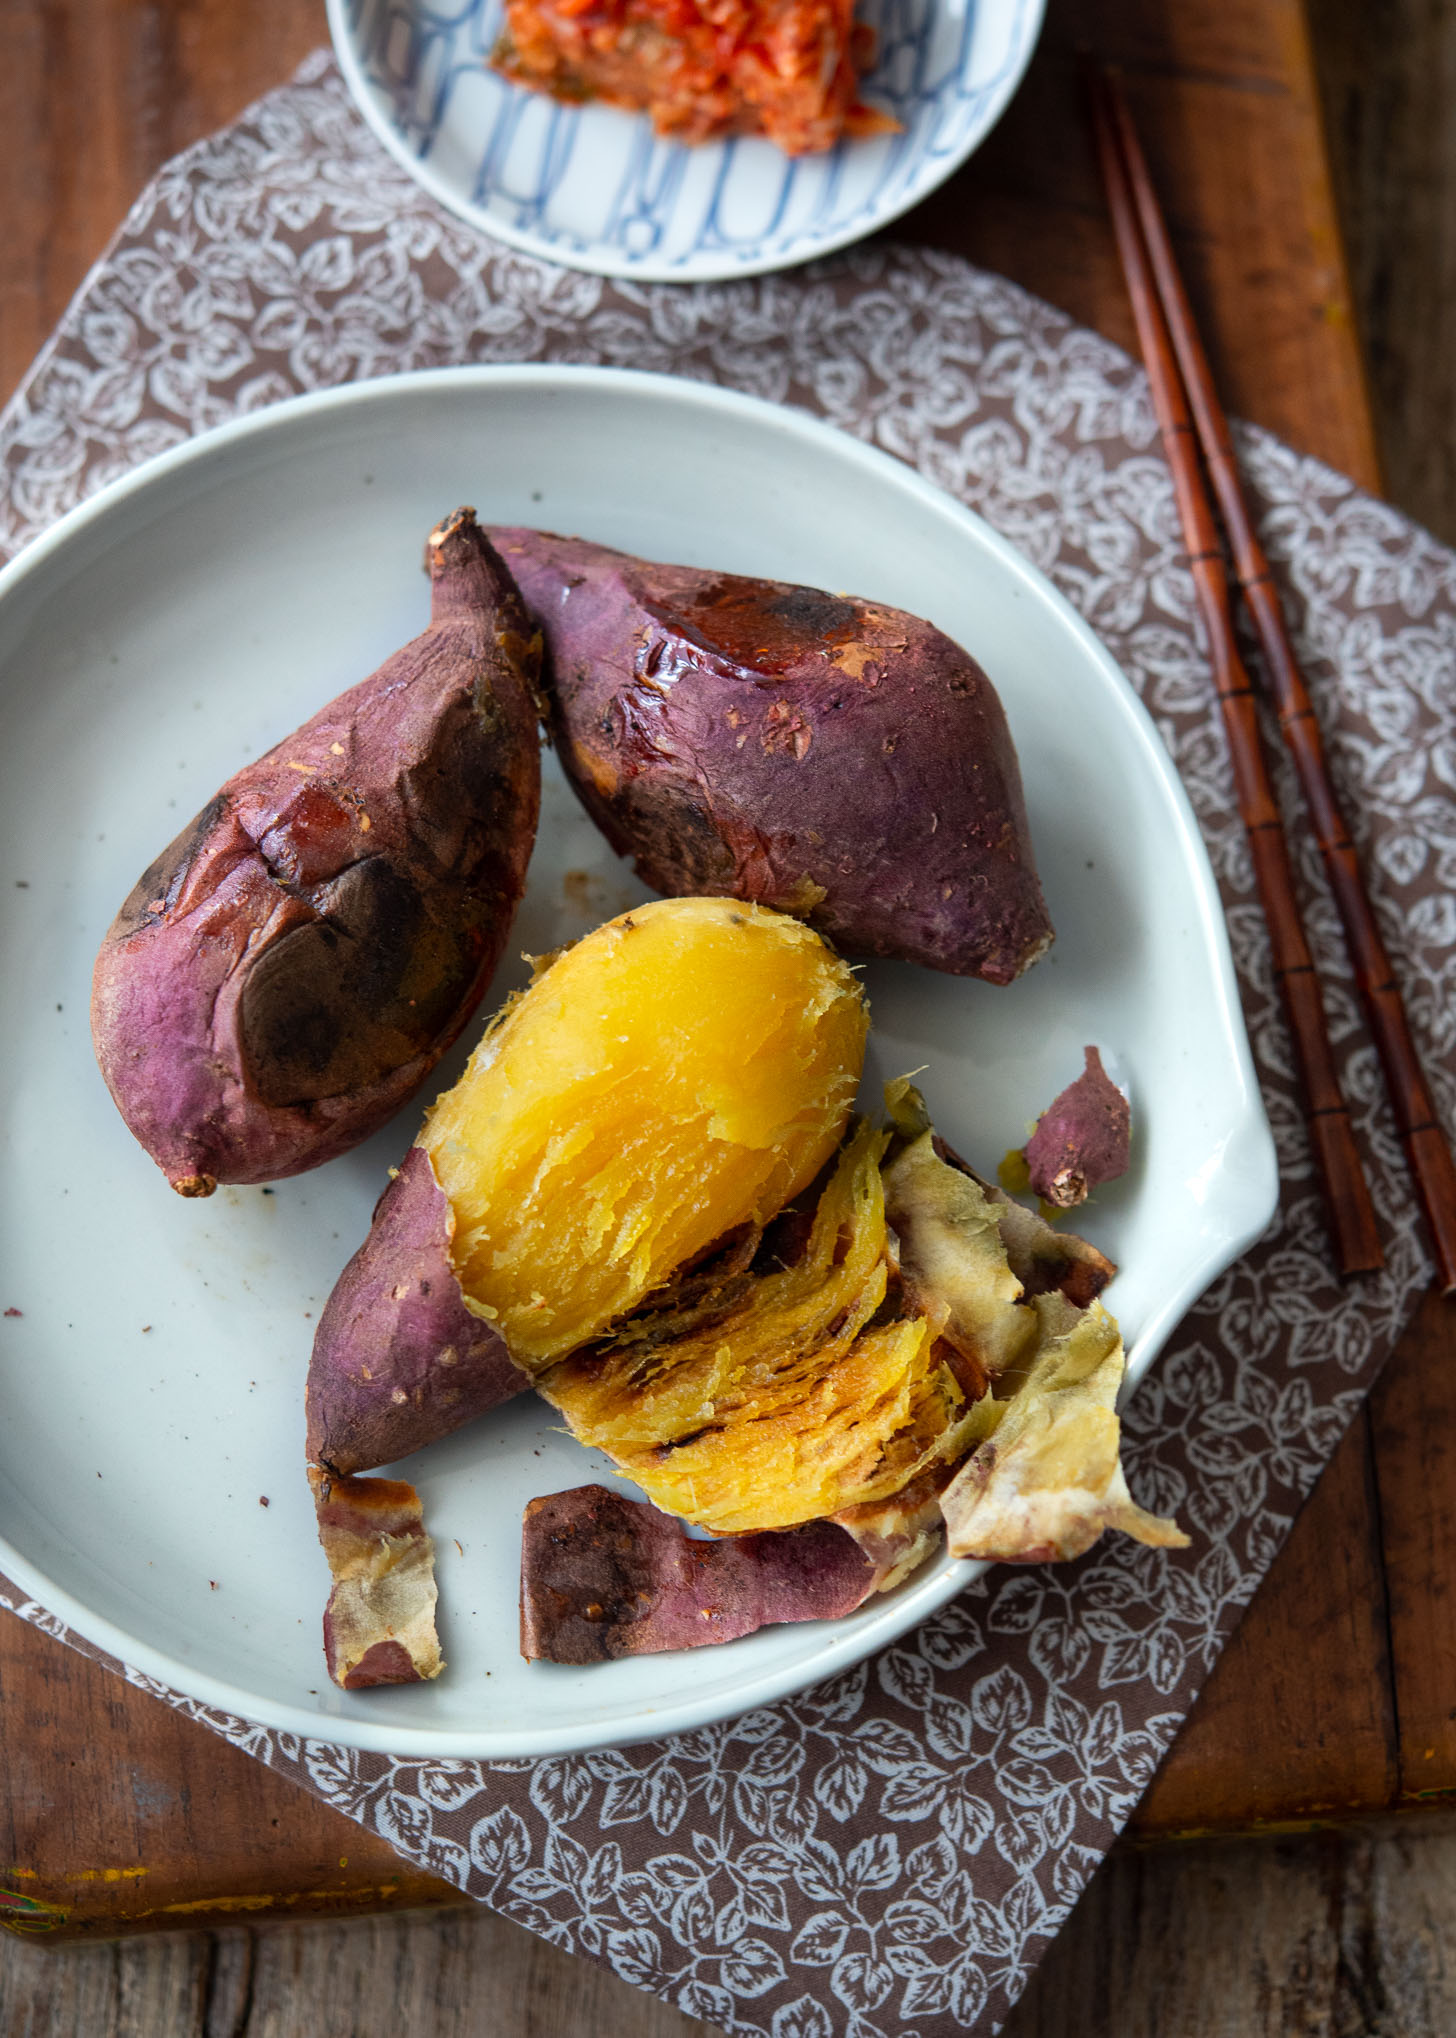 Pan roasted Korean sweet potato is peeled and shows its golden orange flesh inside.